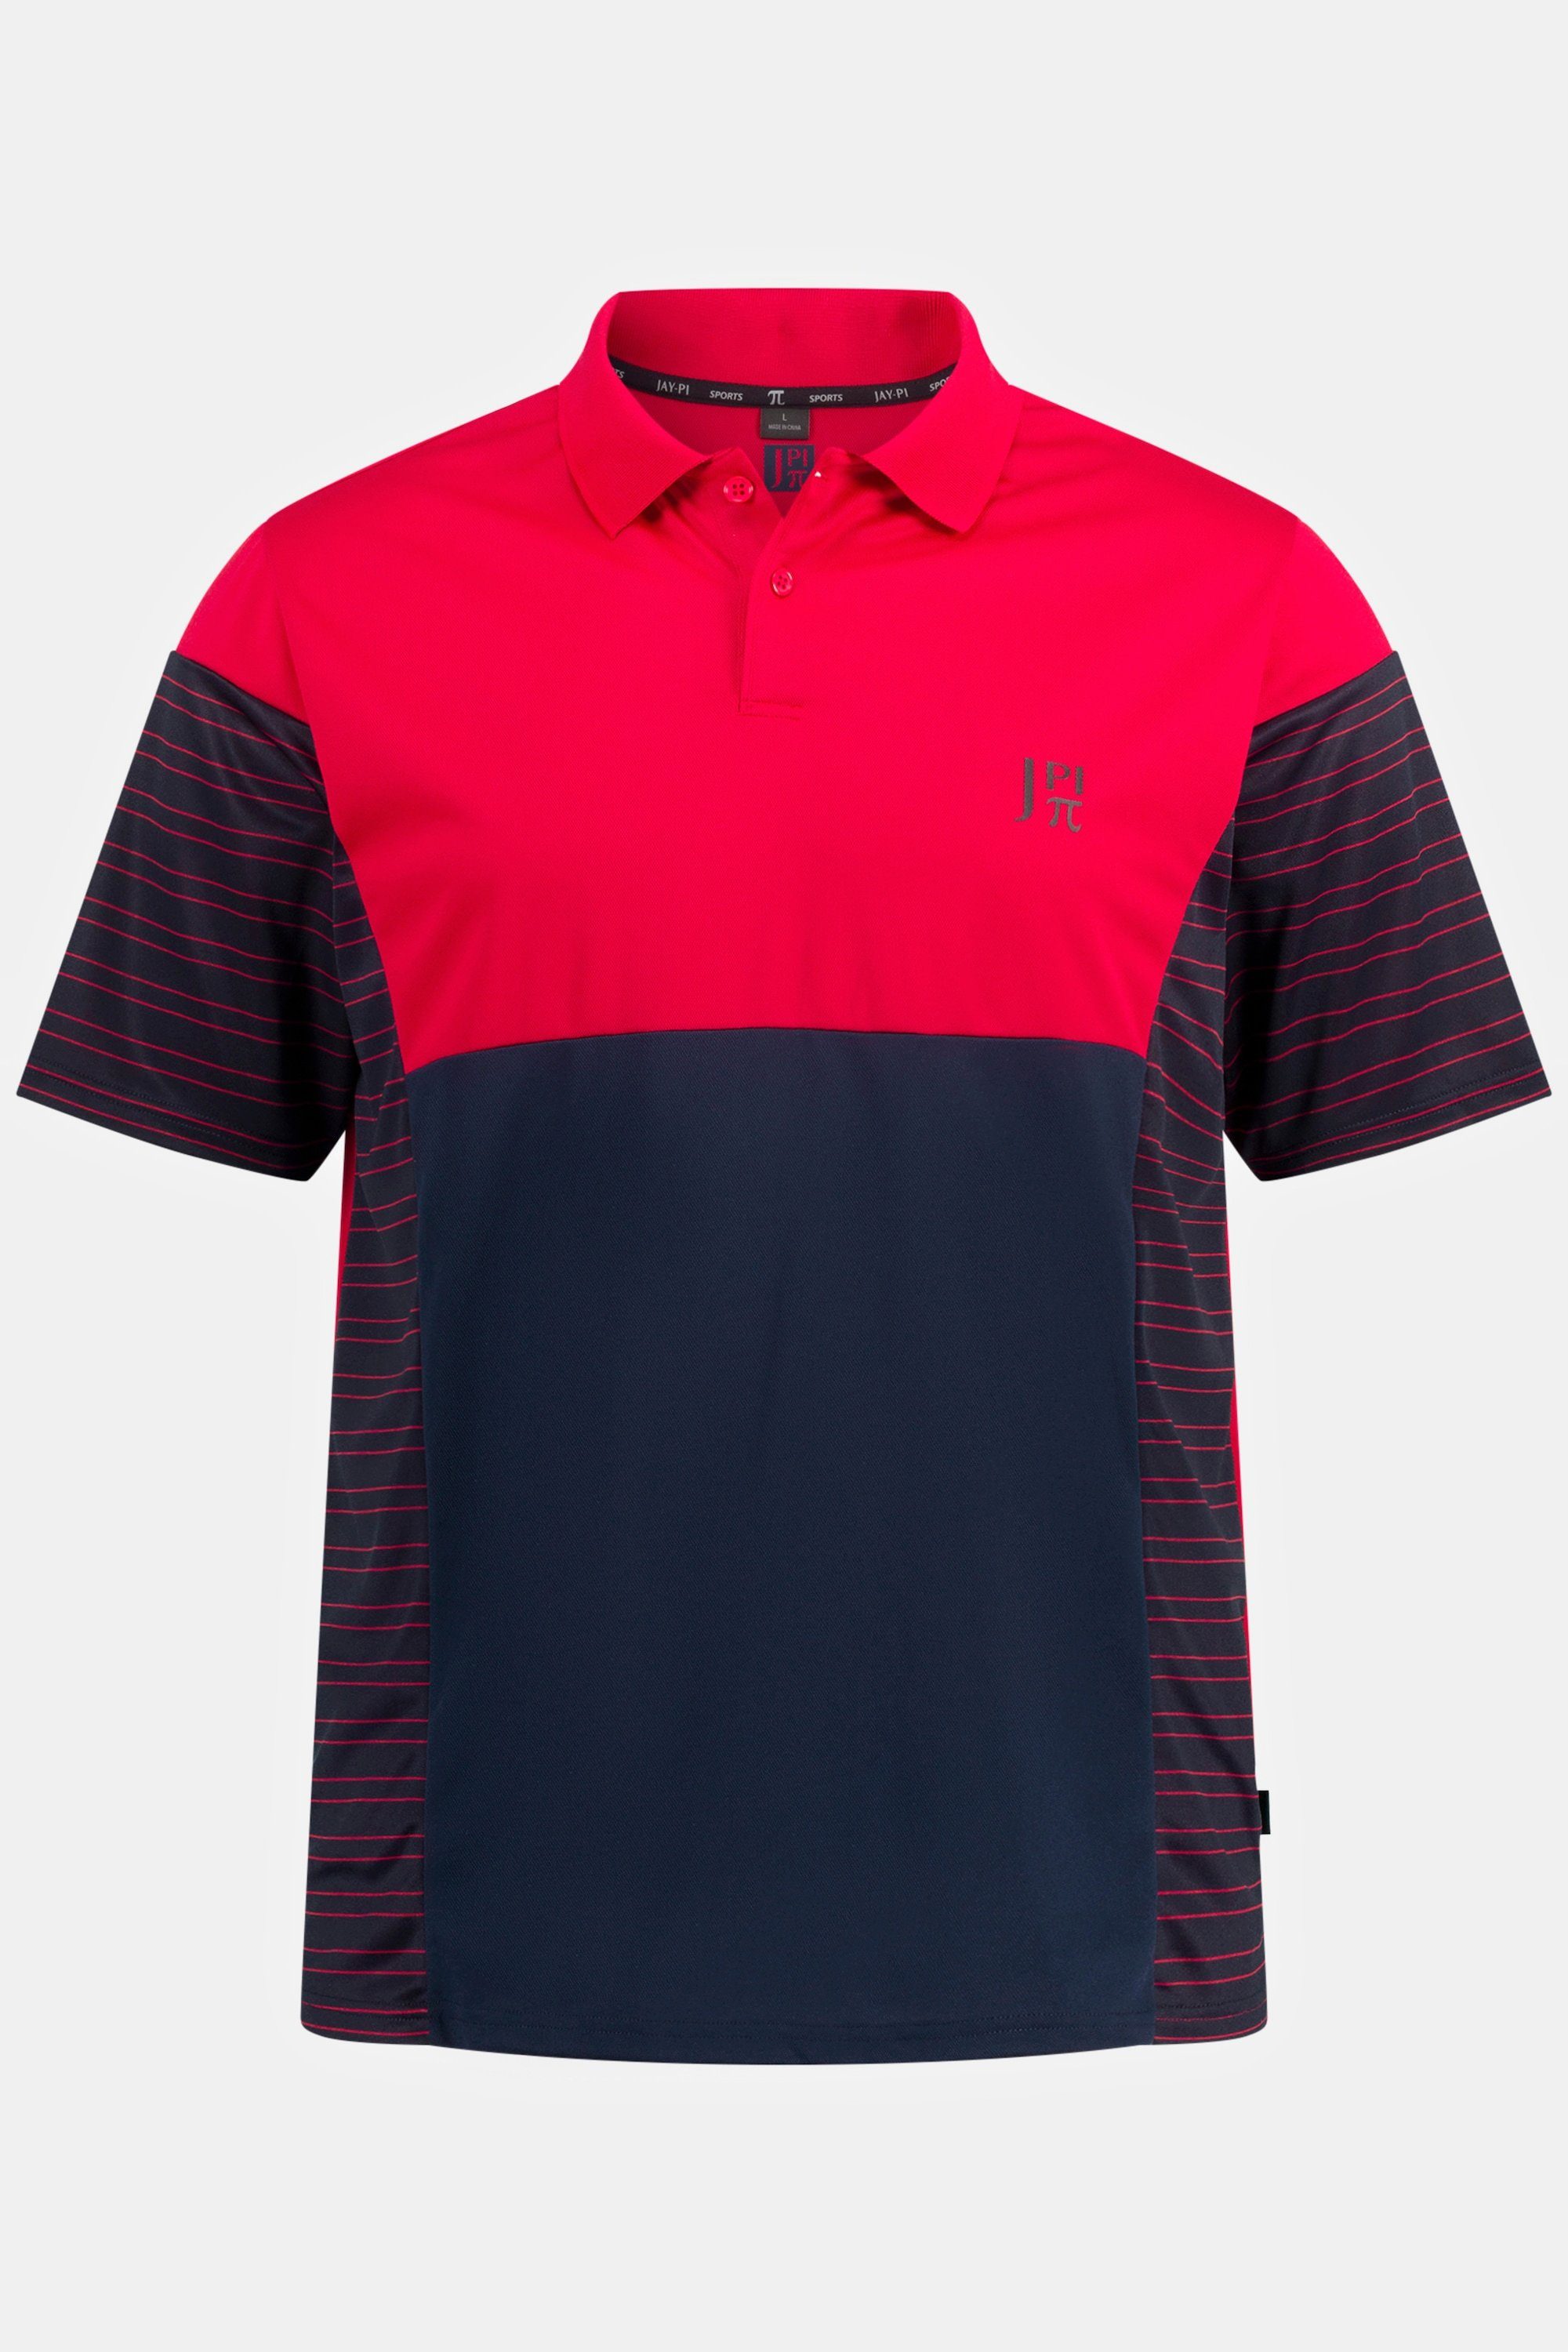 Tennis Funktions-Poloshirt QuickDry JP1880 Poloshirt Halbarm